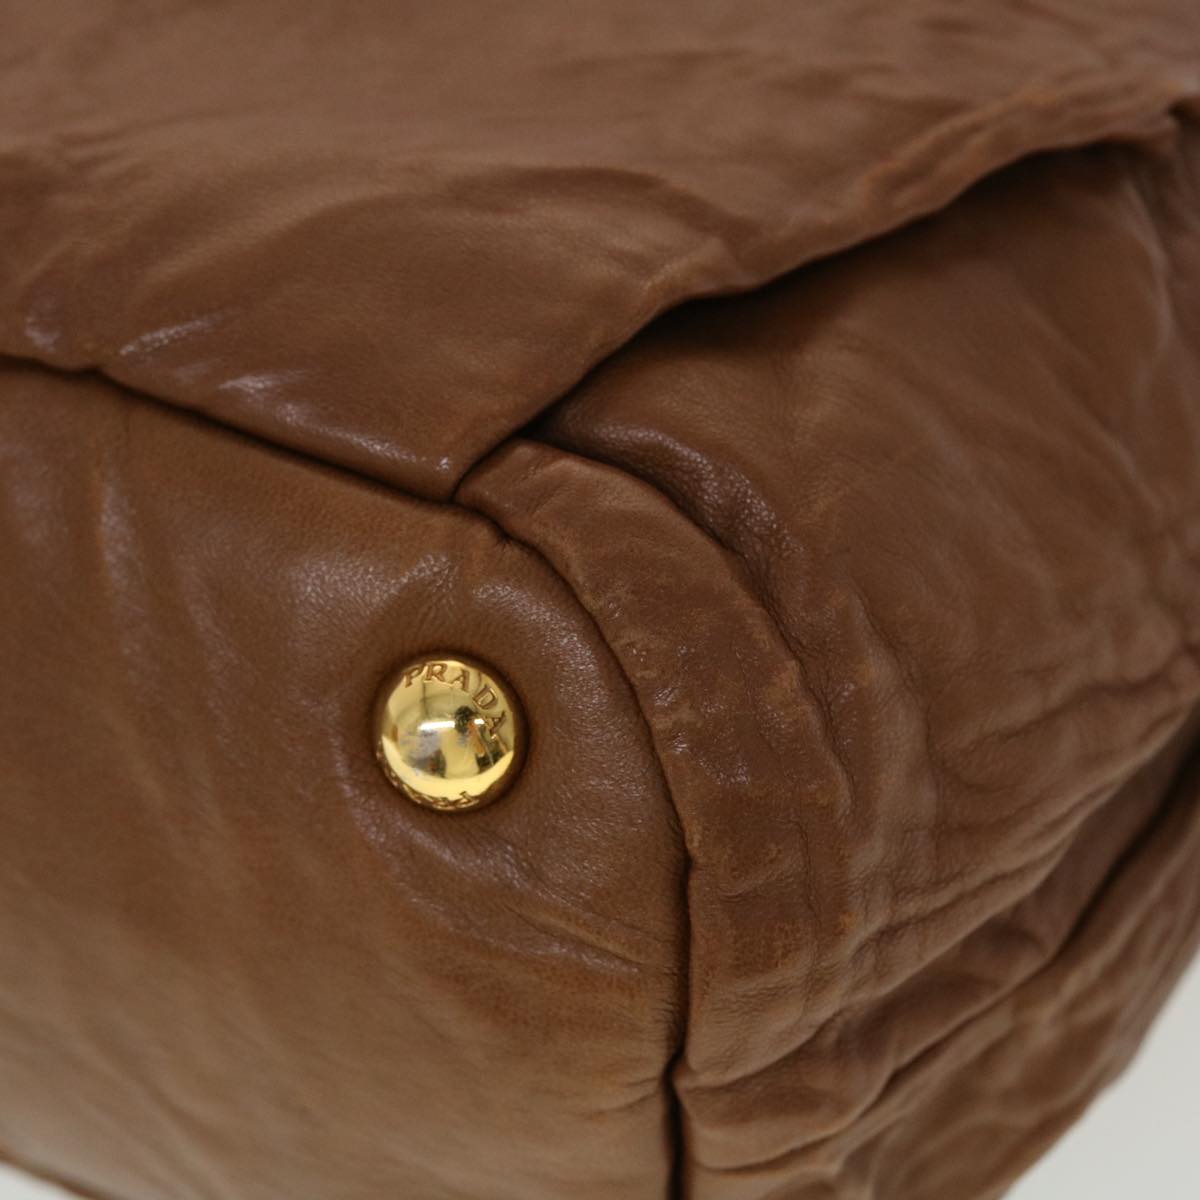 PRADA Hand Bag Leather 2way Shoulder Bag Brown Auth yb143